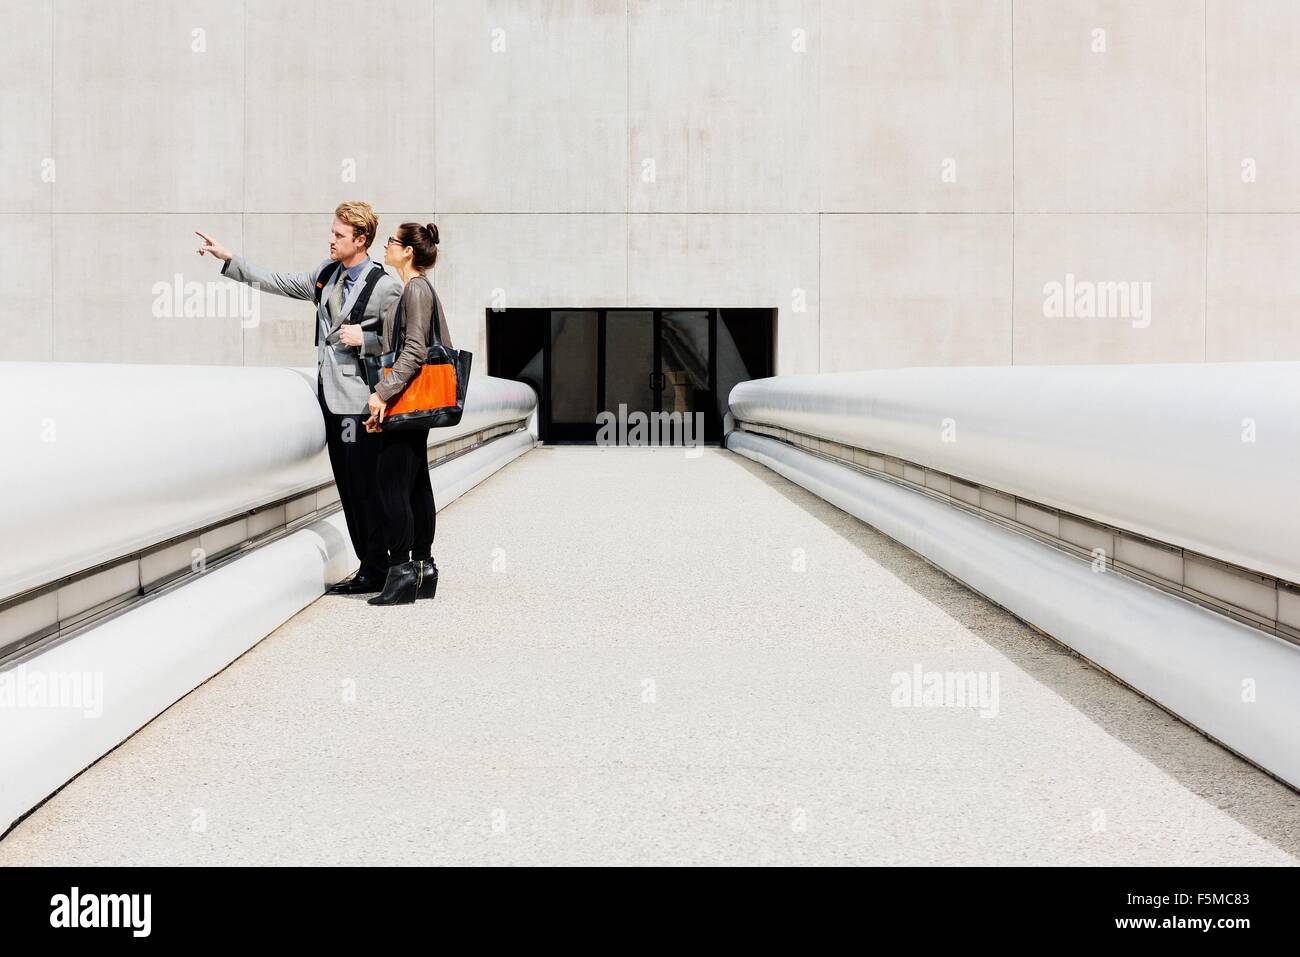 Businessman and woman talking on walkway Stock Photo